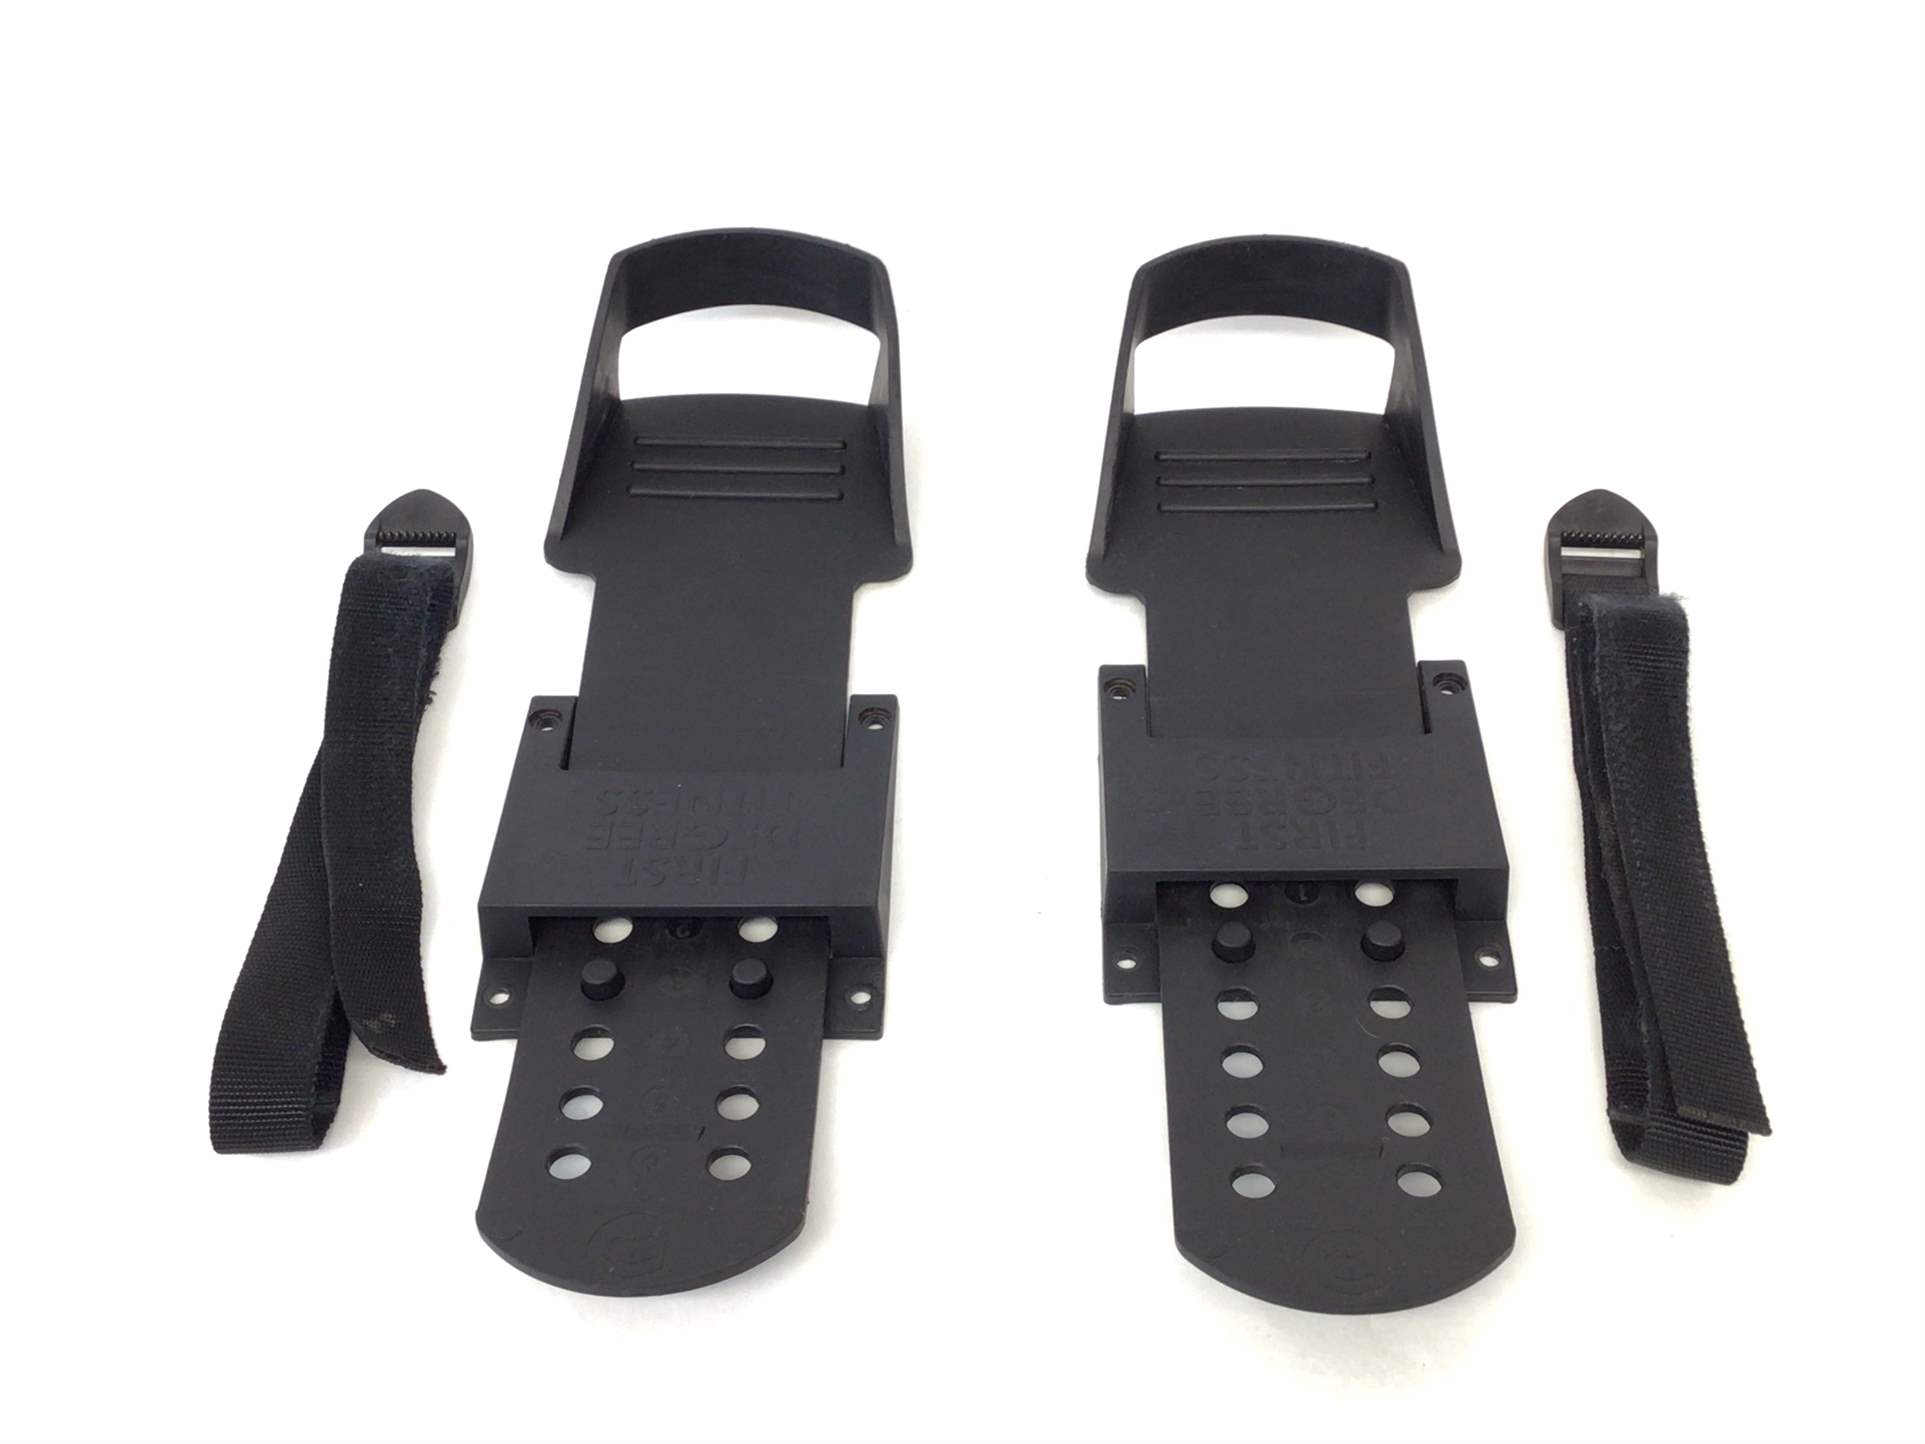 Footplate Plus Sliding Base and Foot Strap - Black & Buckle Set (Used)